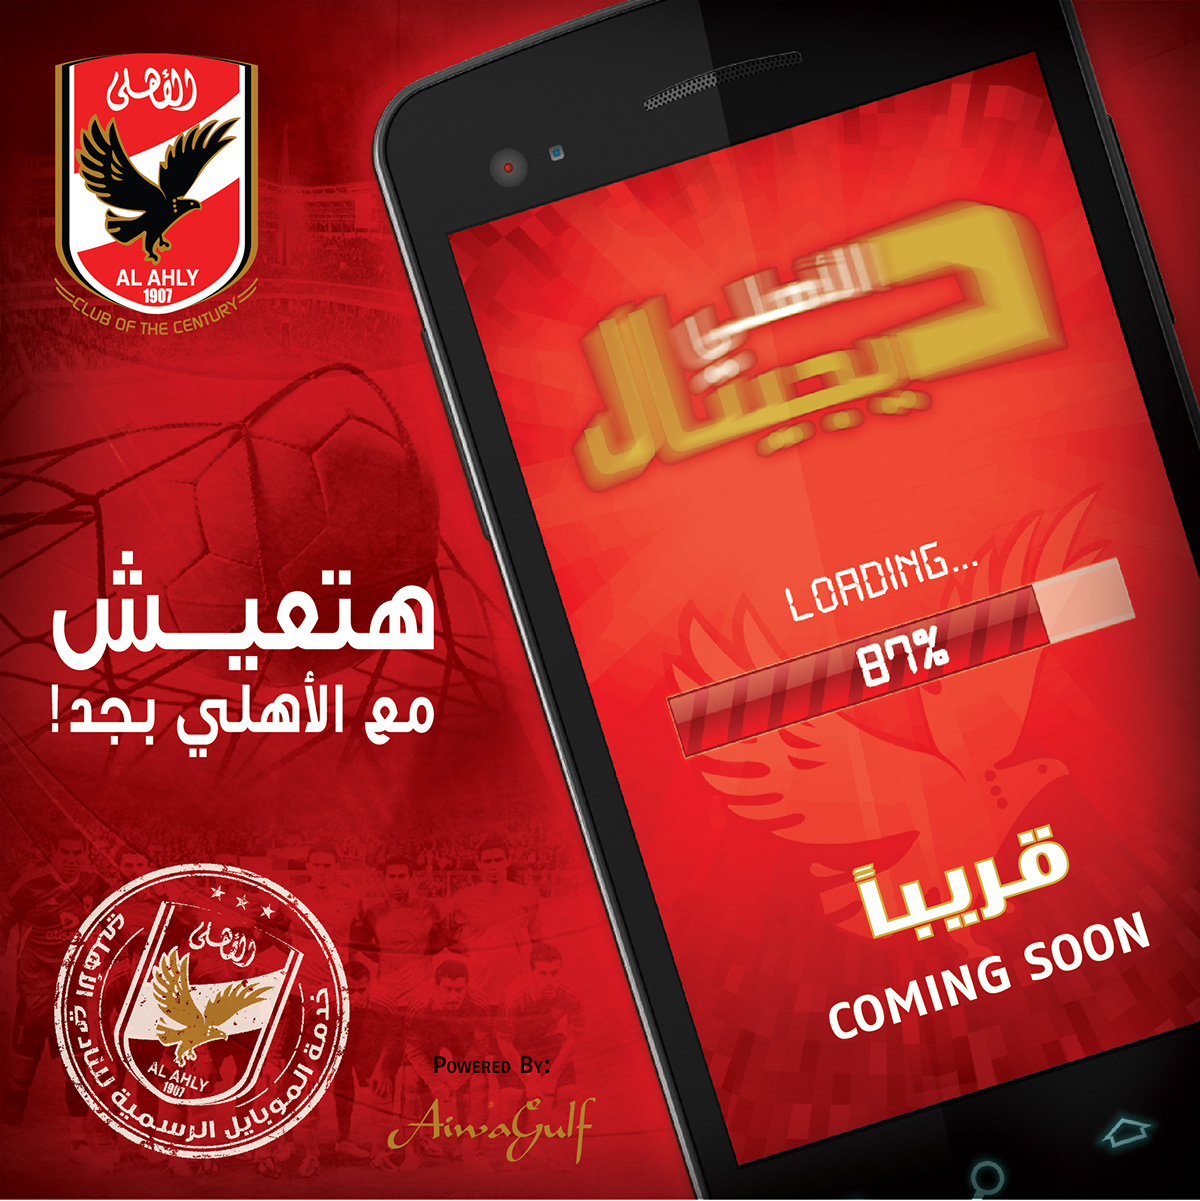 AlAhly AHLY club team football mobile digital service SMS egypt sports